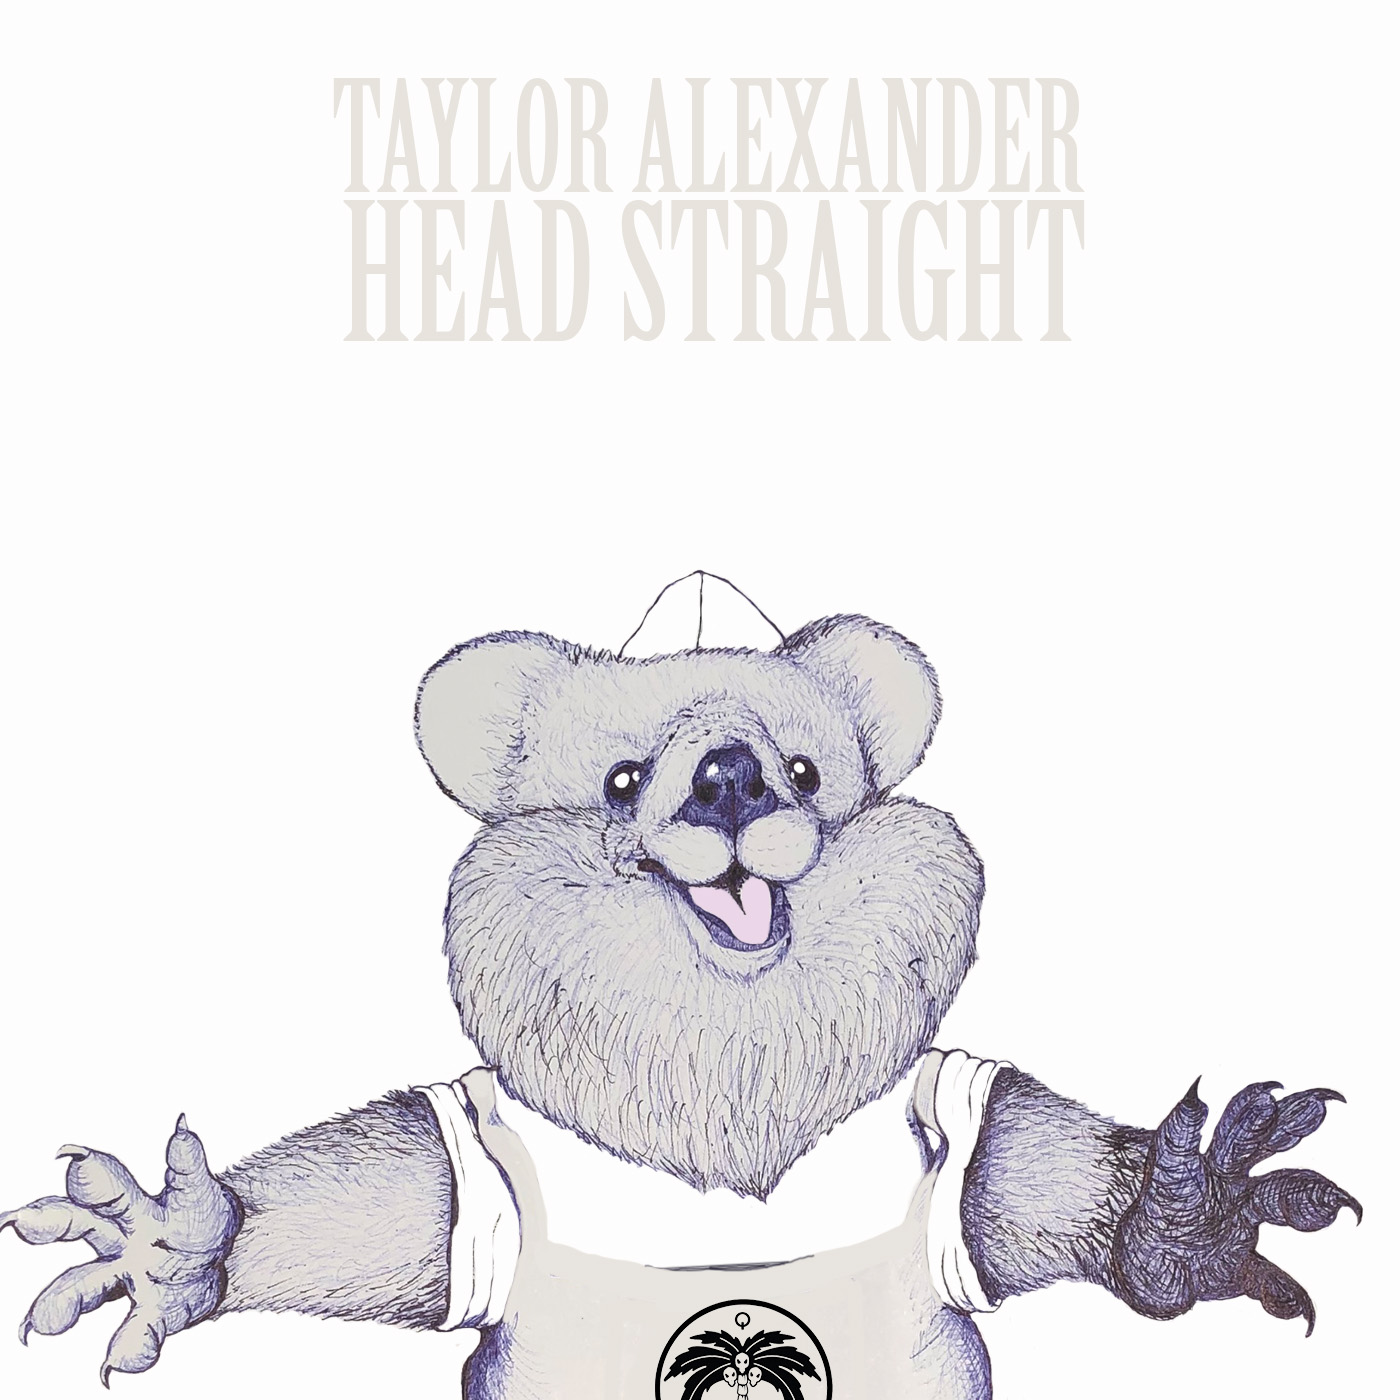 Head Straight by TA #02